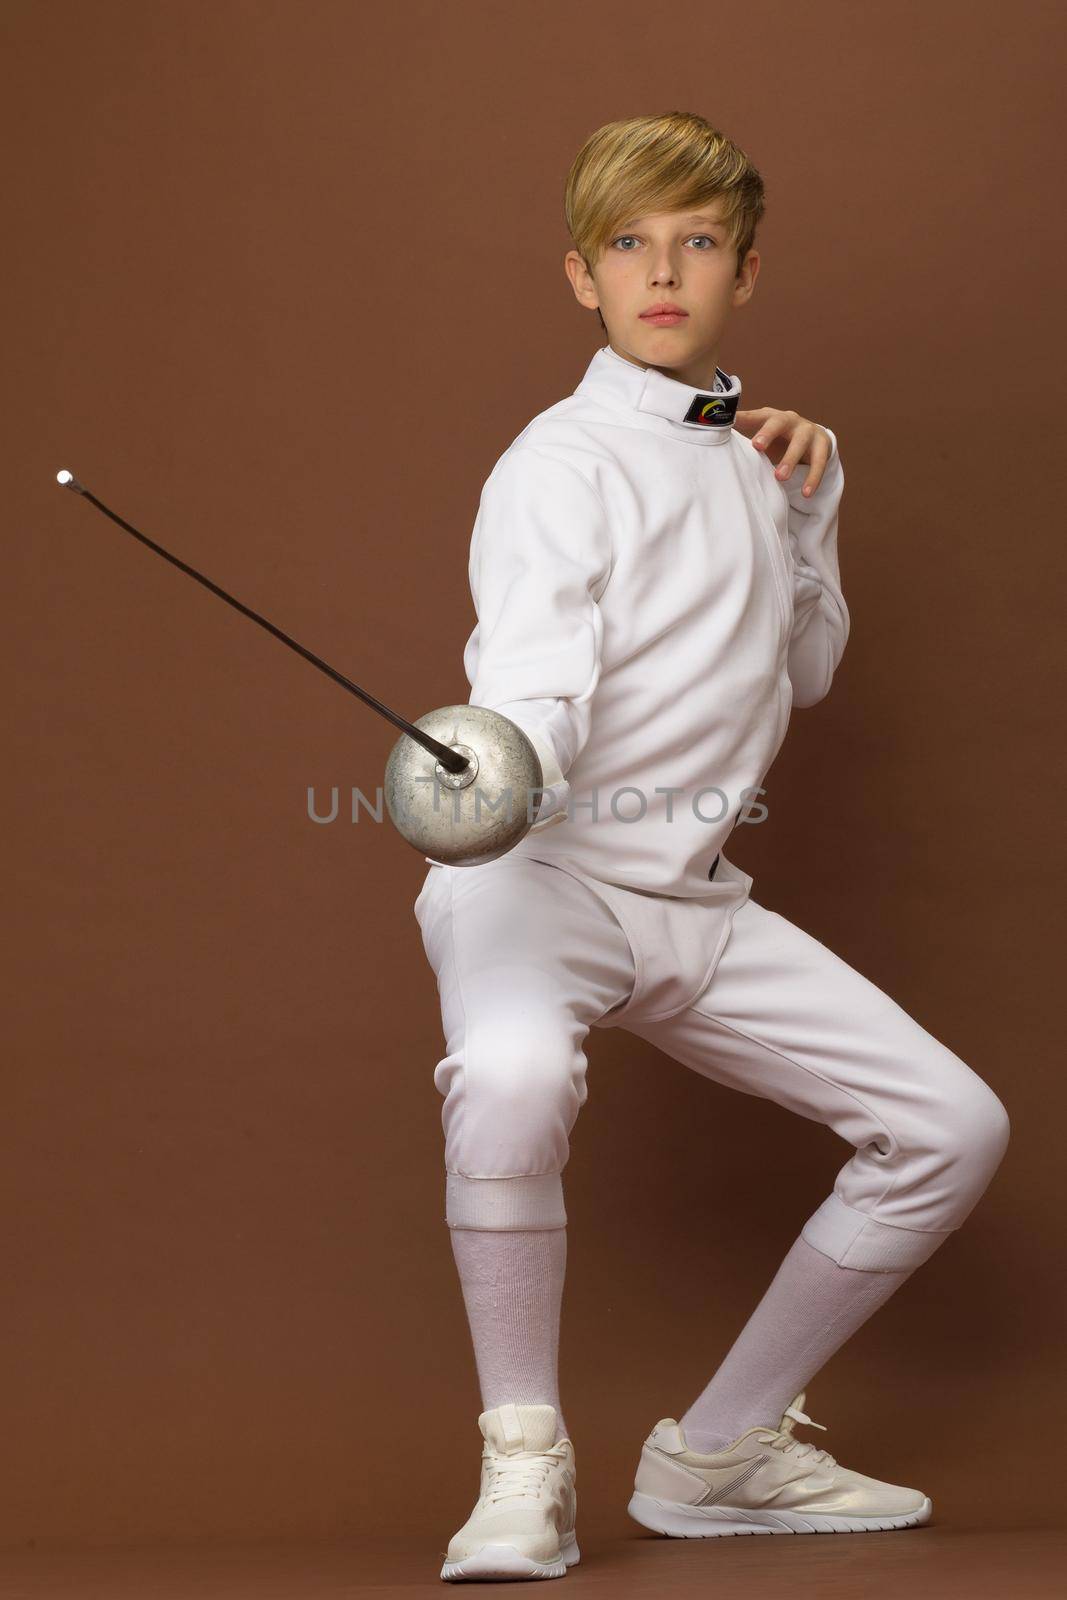 Boy fencer standing in attacking pose by kolesnikov_studio